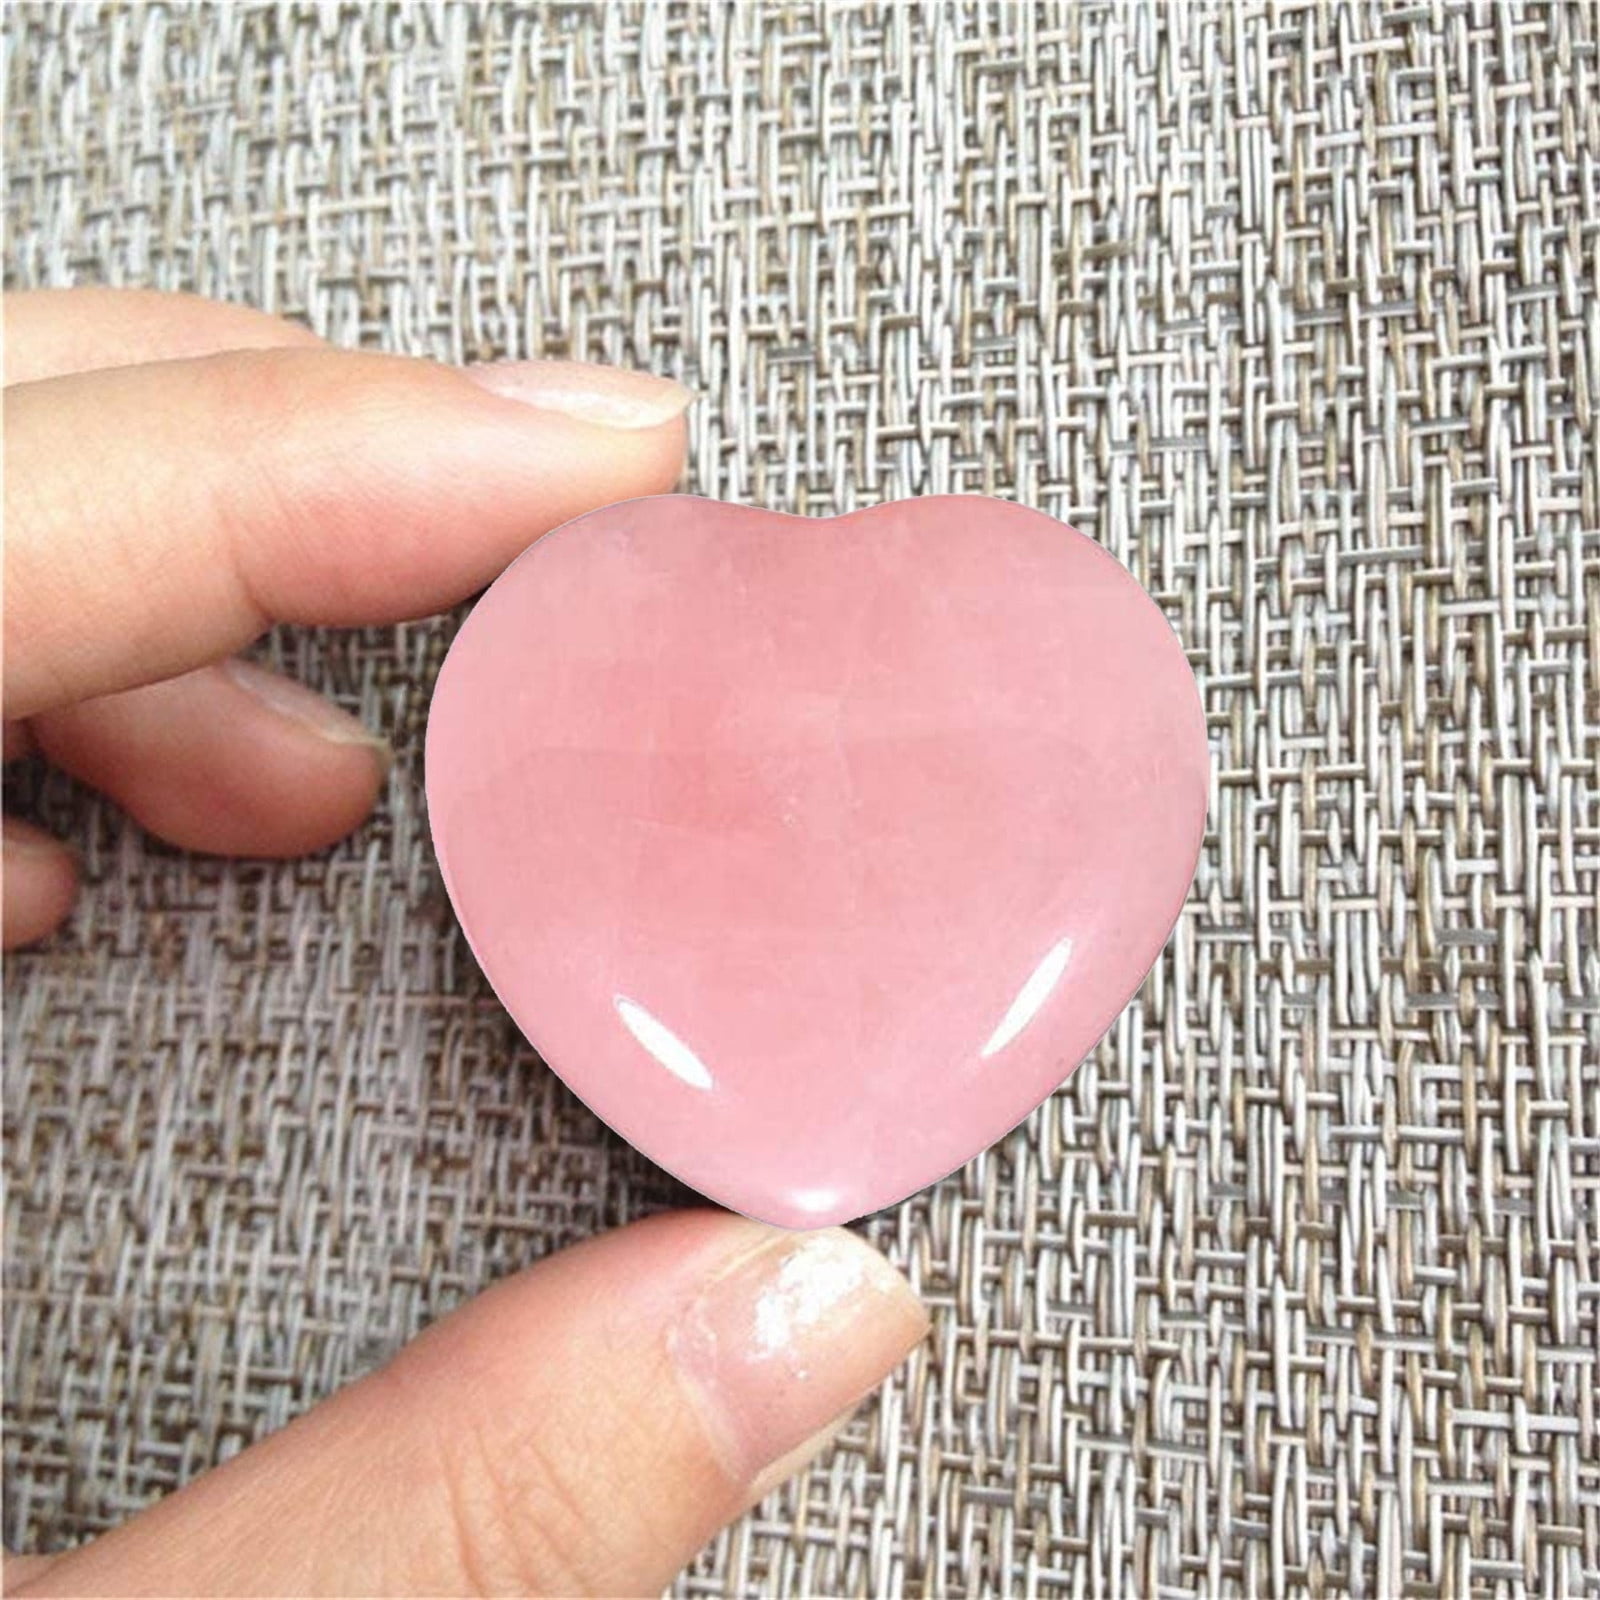 Rose Quartz One Tumbled Stone 30-35mm Reiki Healing Crystal Love Compassion 